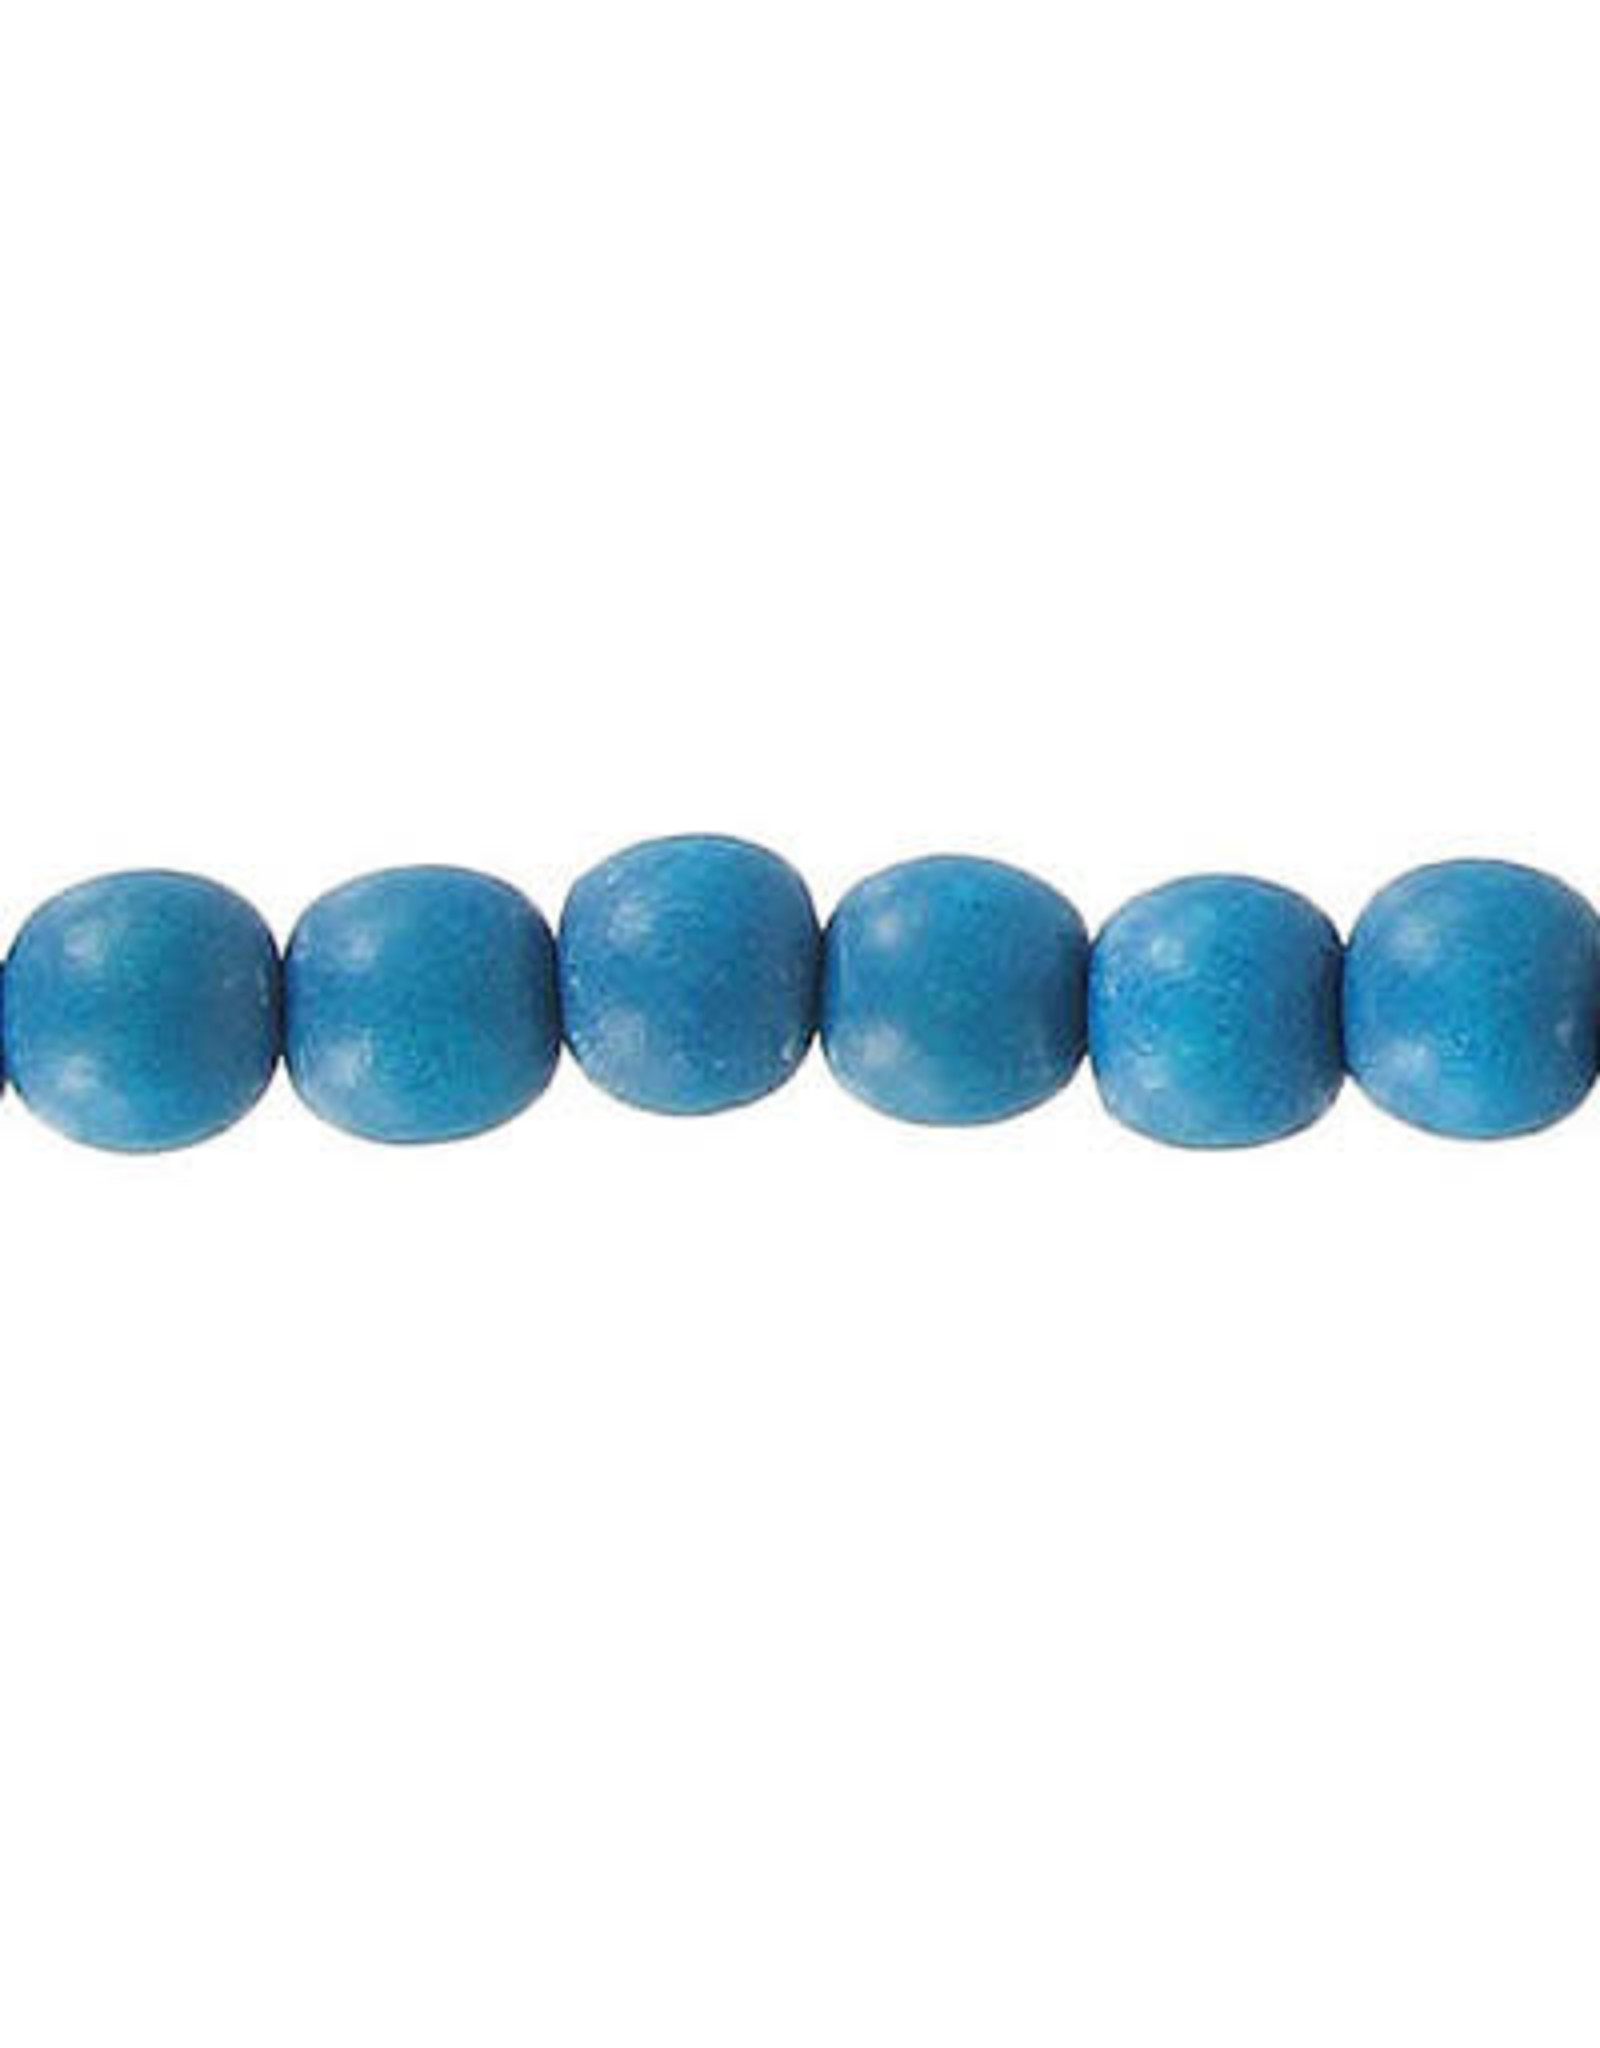 Wood 12mm  Turquoise Blue 15" Strand  approx  x32